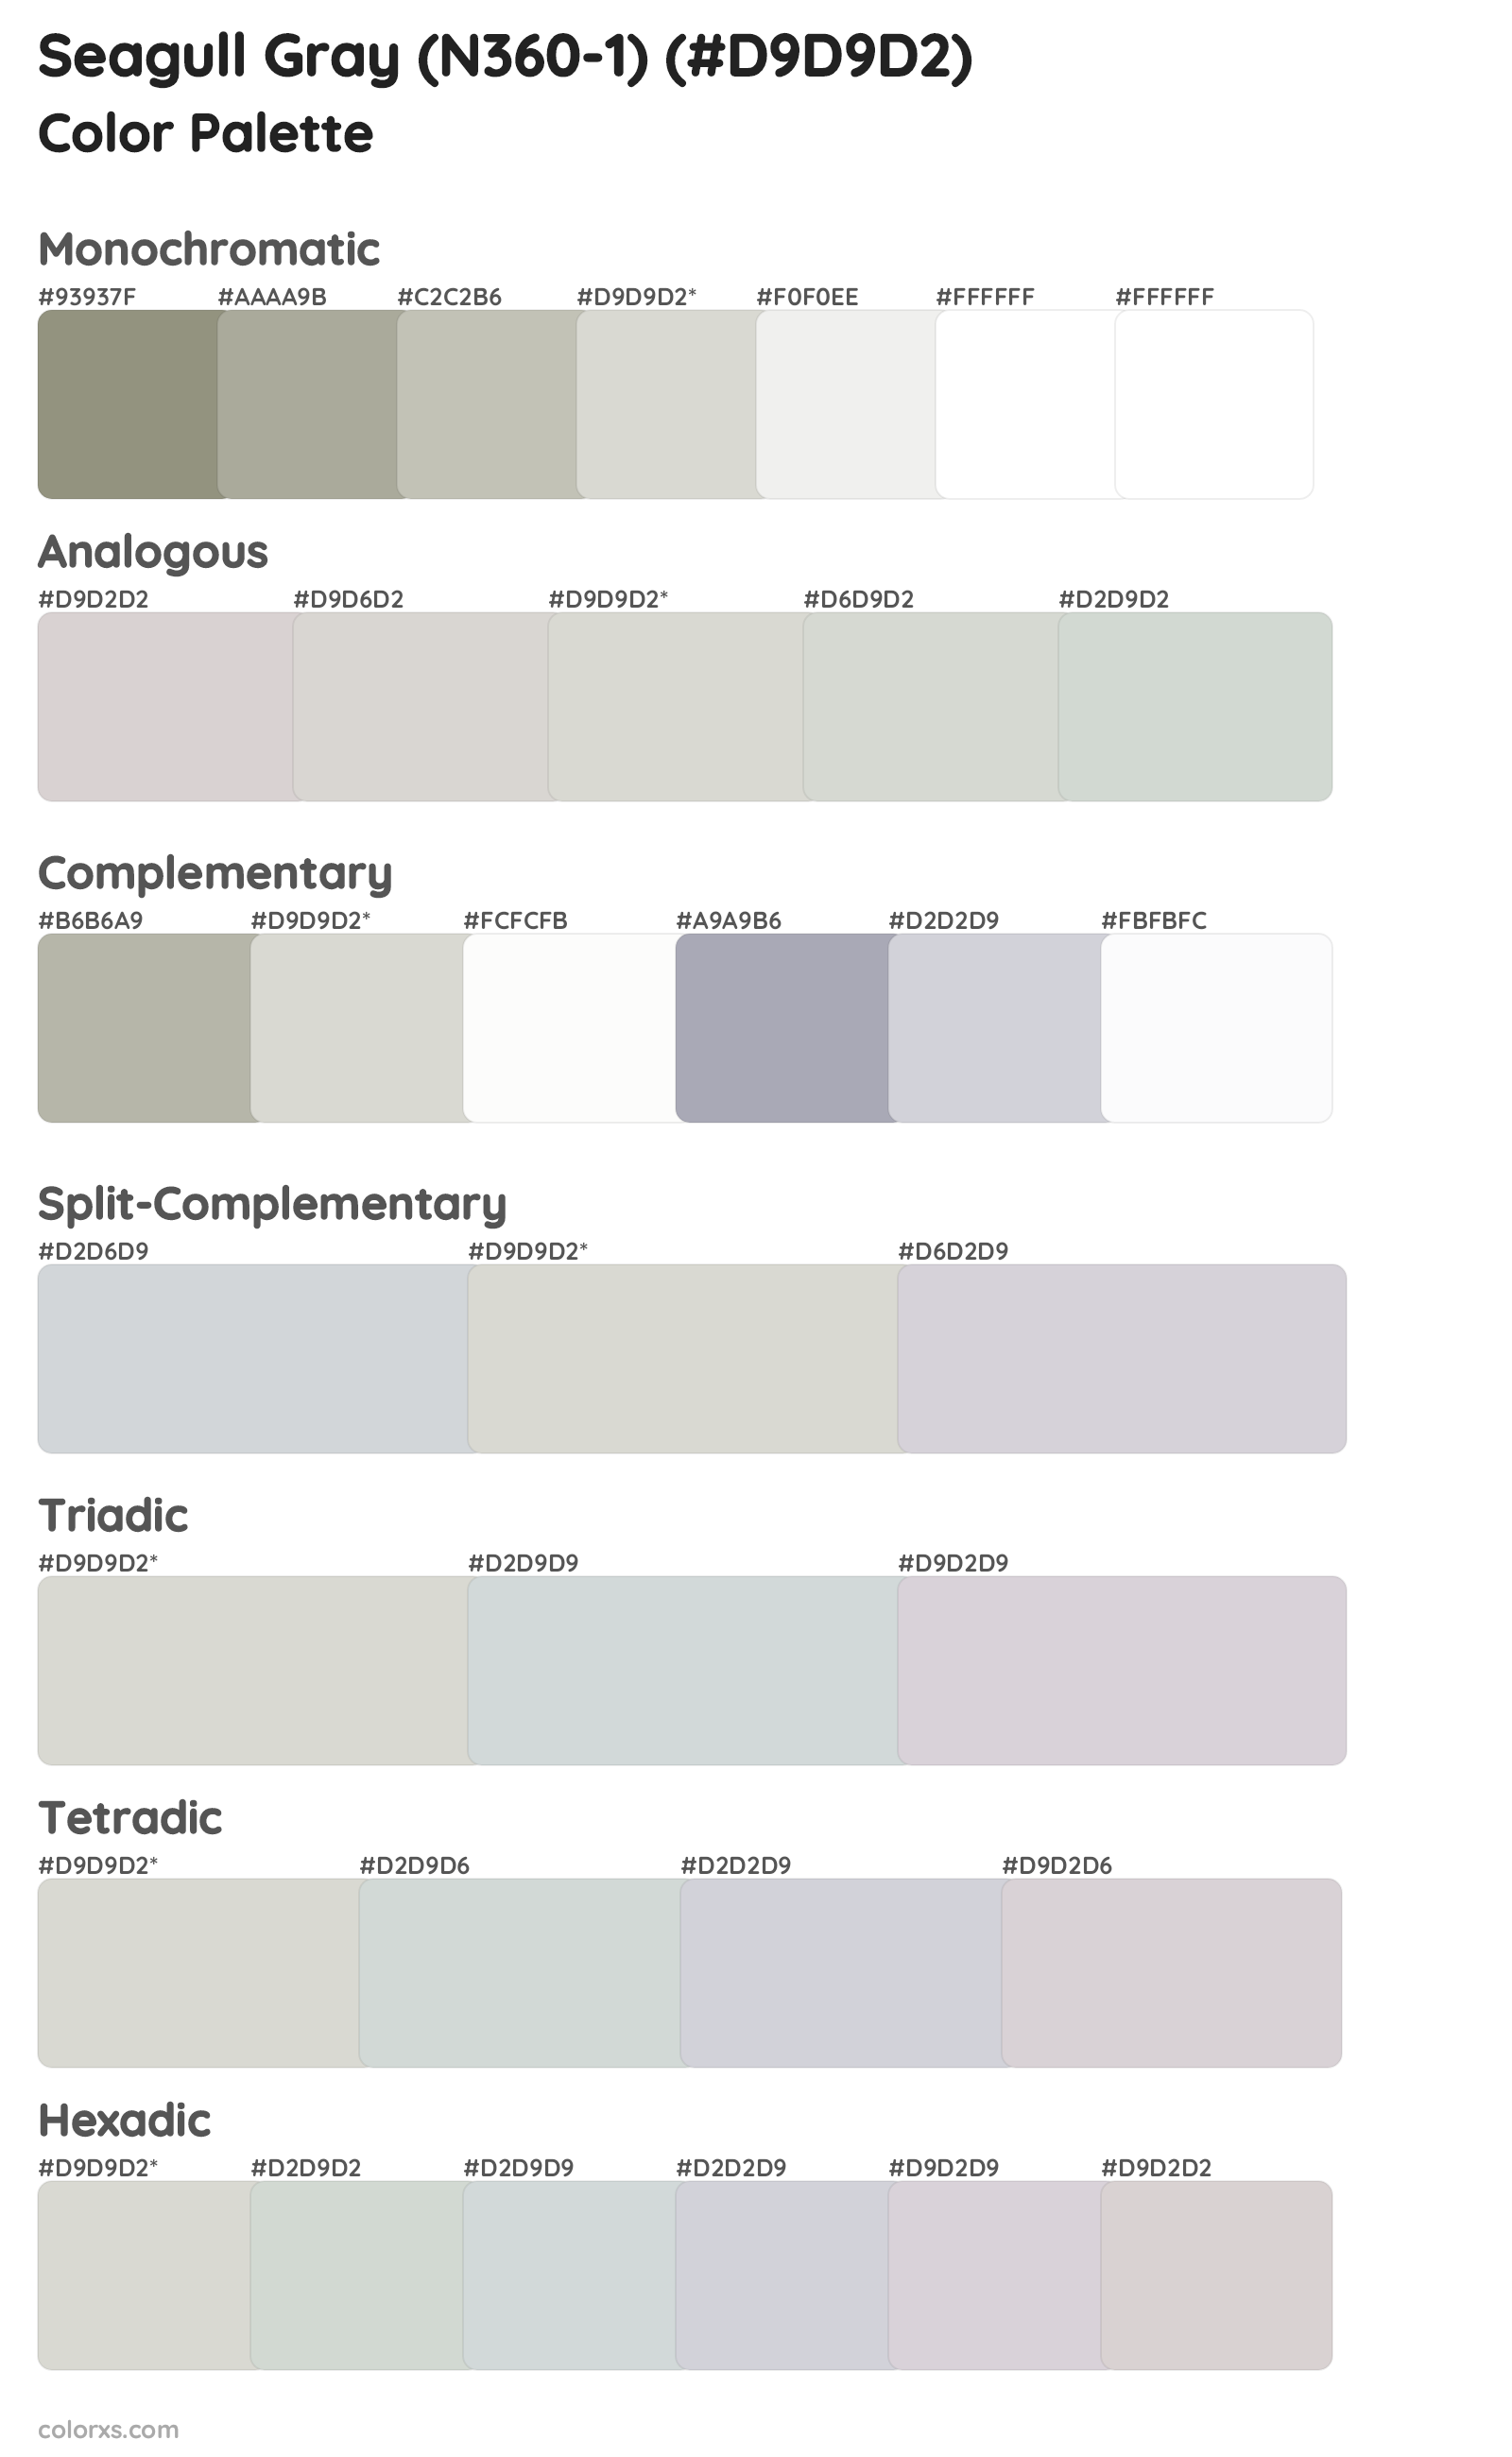 Seagull Gray (N360-1) Color Scheme Palettes